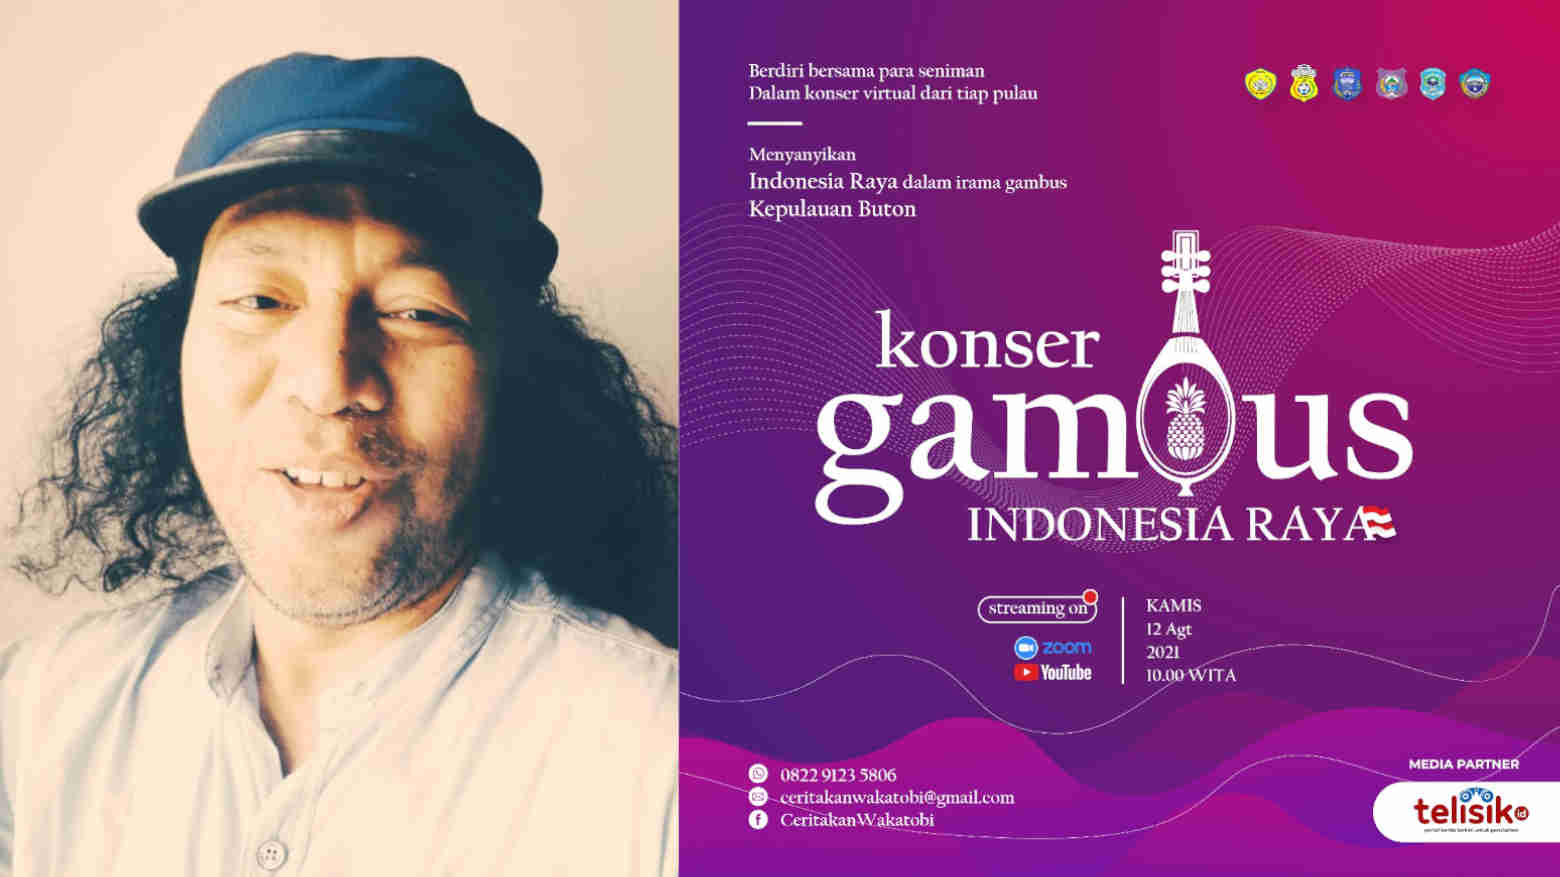 Kepulauan Buton Bakal Gelar Konser Gambus Indonesia Raya